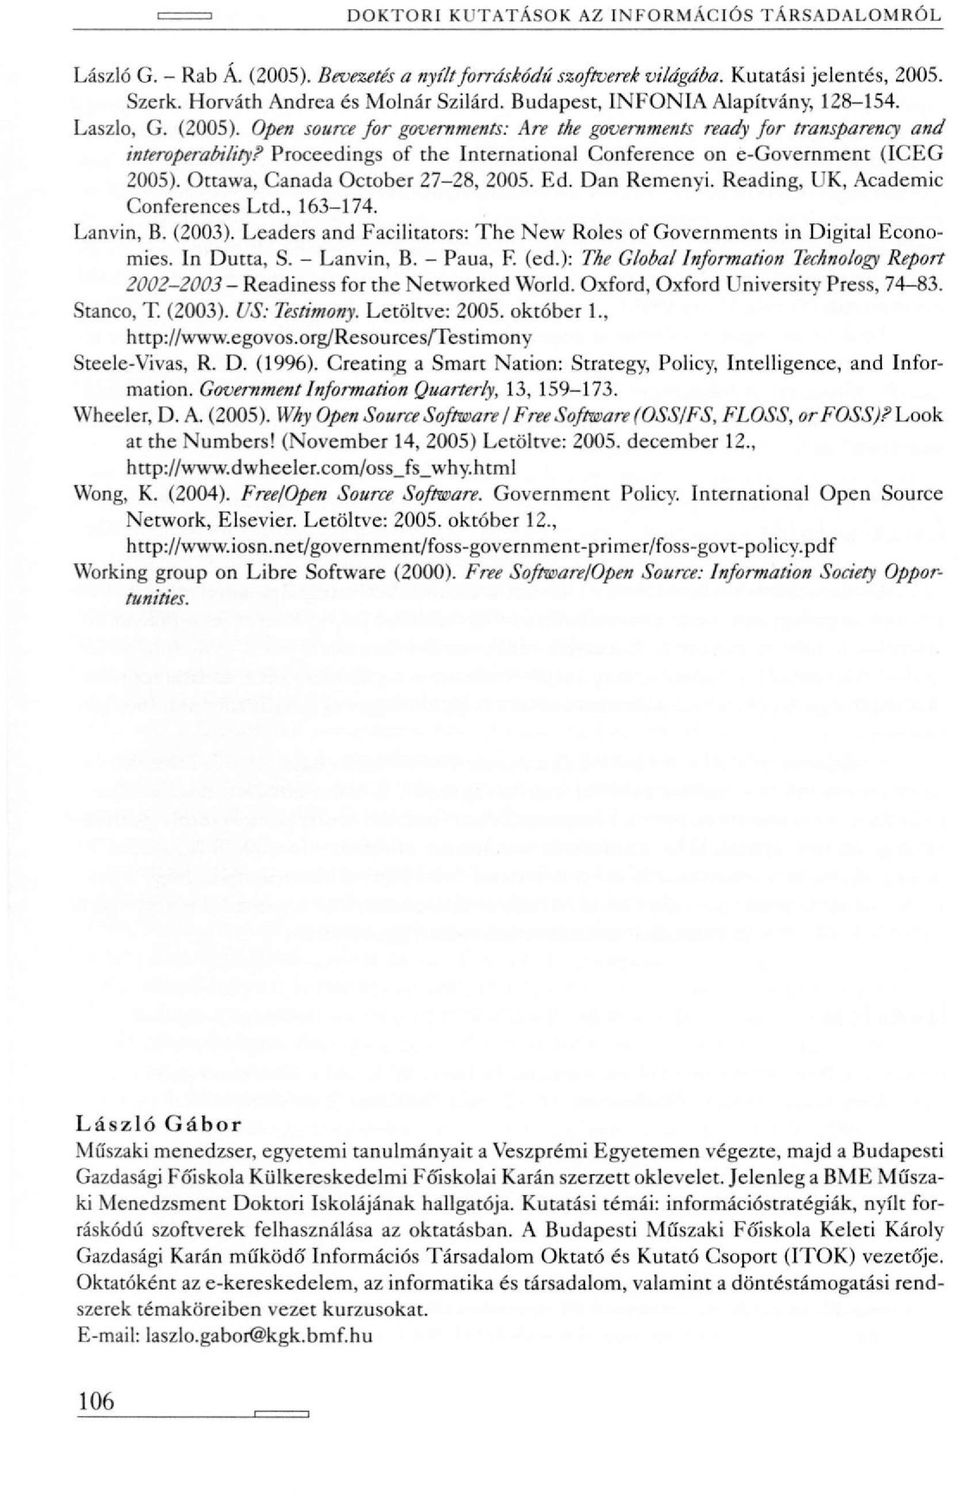 Proceedings of the International Conference on e-government (ICEG 2005). Ottawa, Canada Octobet 27-28, 2005. Ed. Dan Reményi. Reading, UK, Academic Conferences Ltd., 163-174. Lanvin, B. (2003).